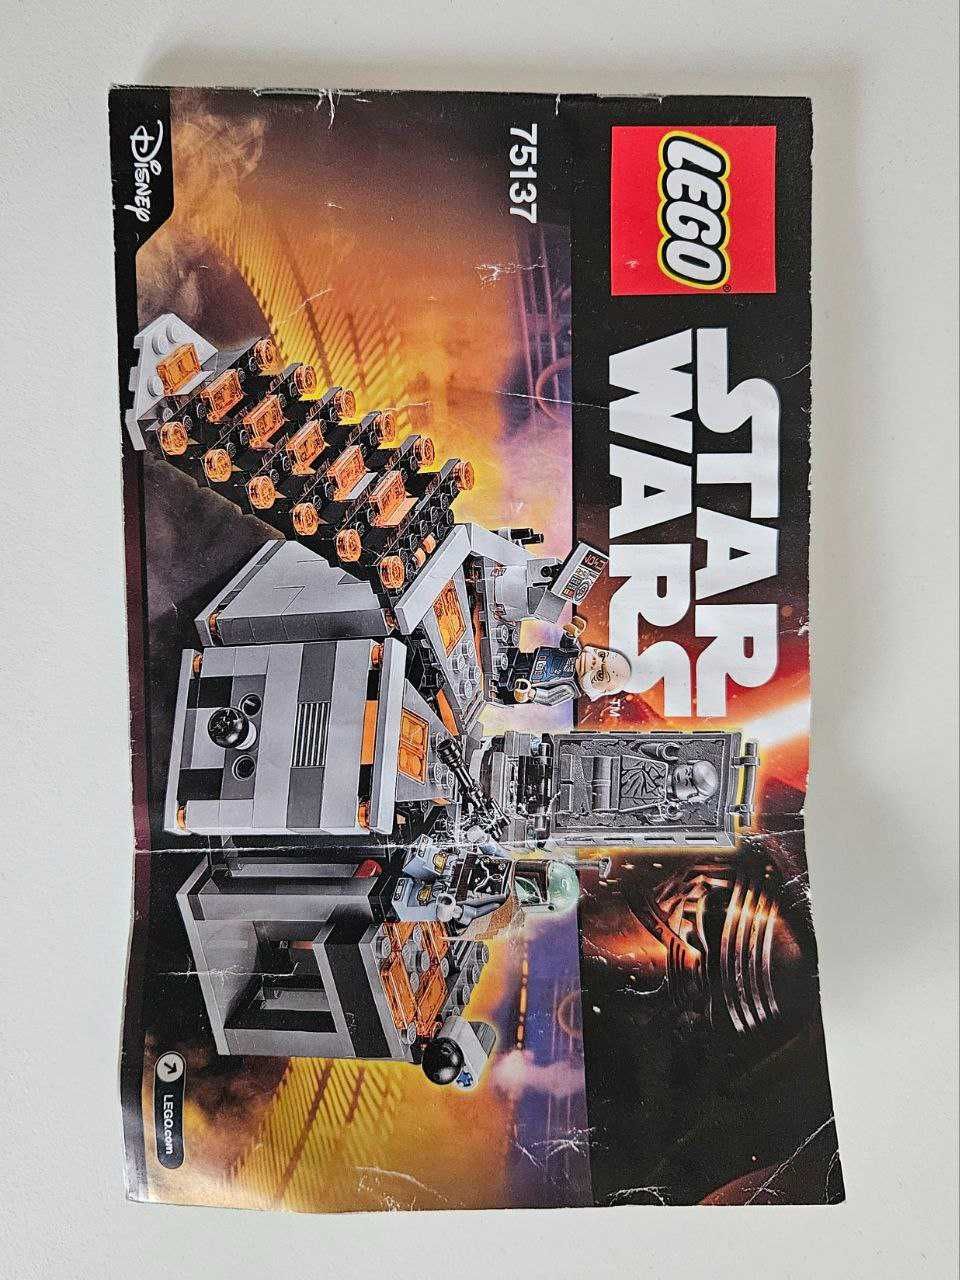 Zestaw Lego 75137 Star Wars